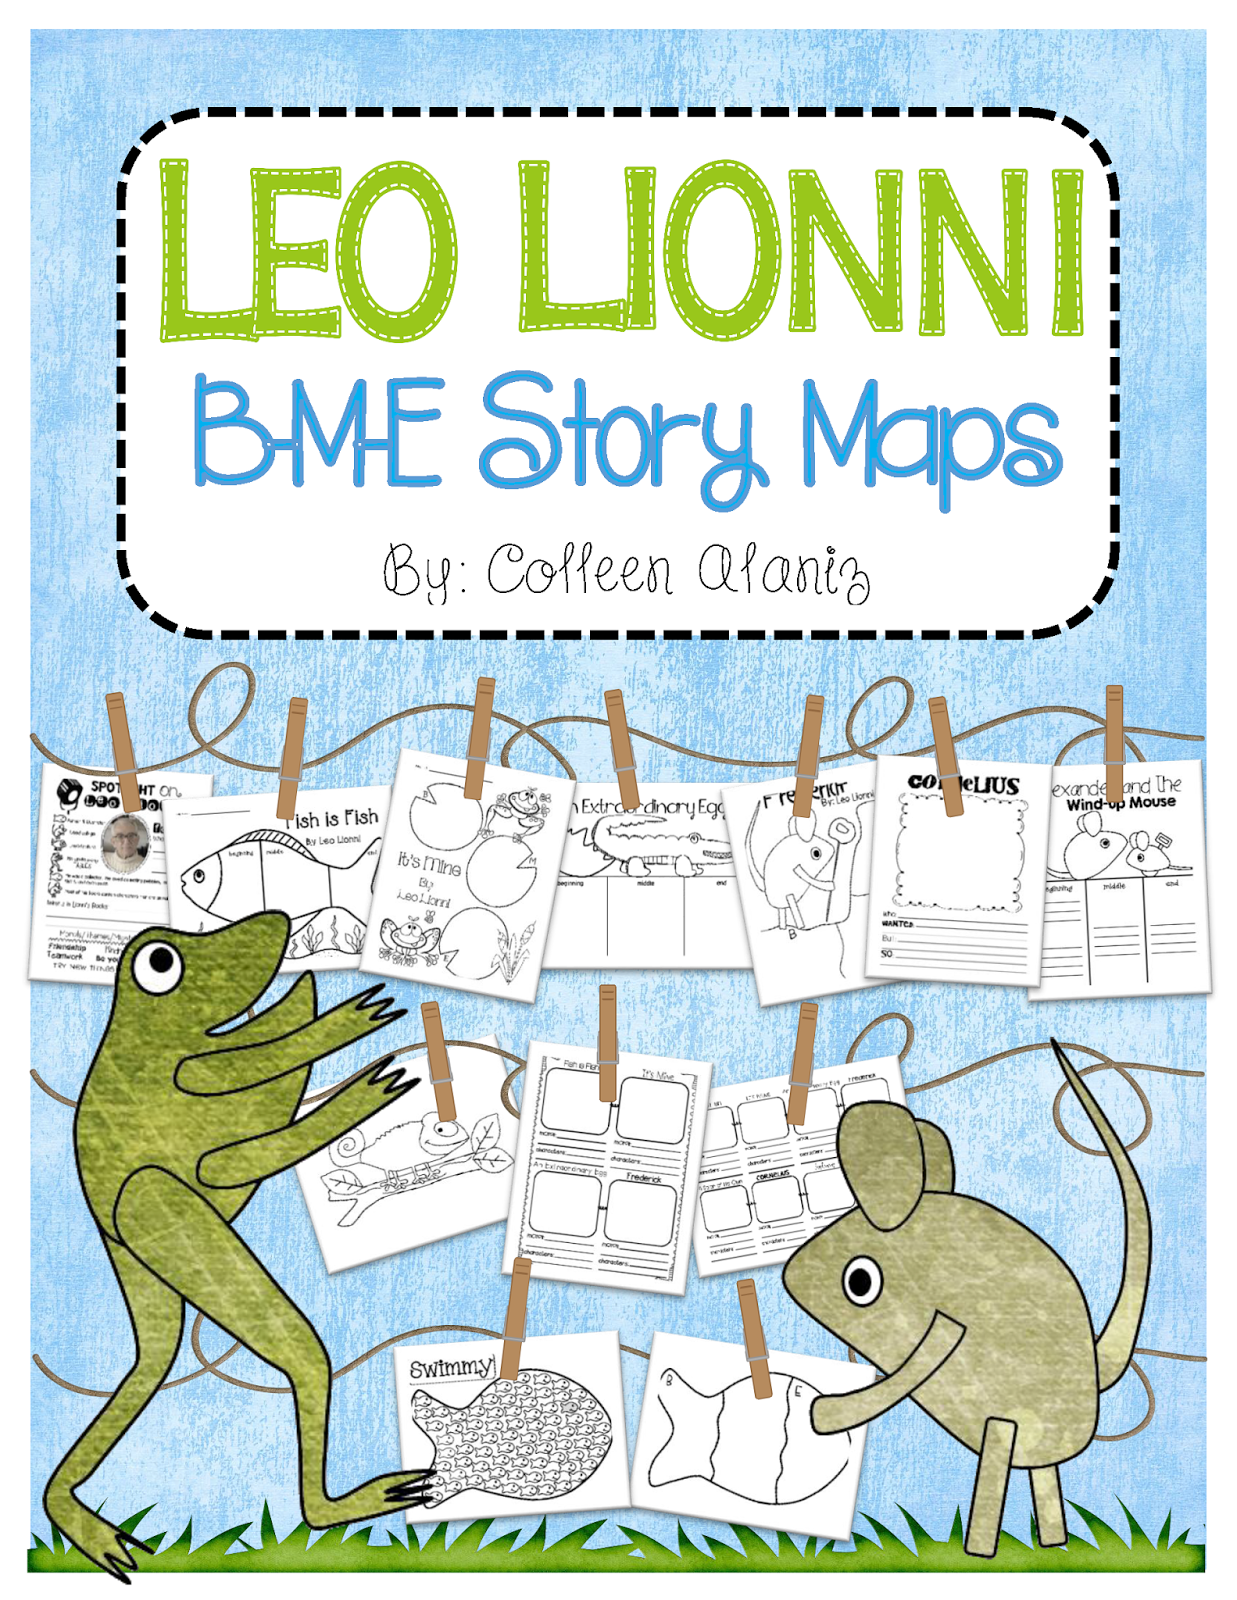 http://www.teacherspayteachers.com/Product/Leo-Lionni-B-M-E-Story-Maps-1559265